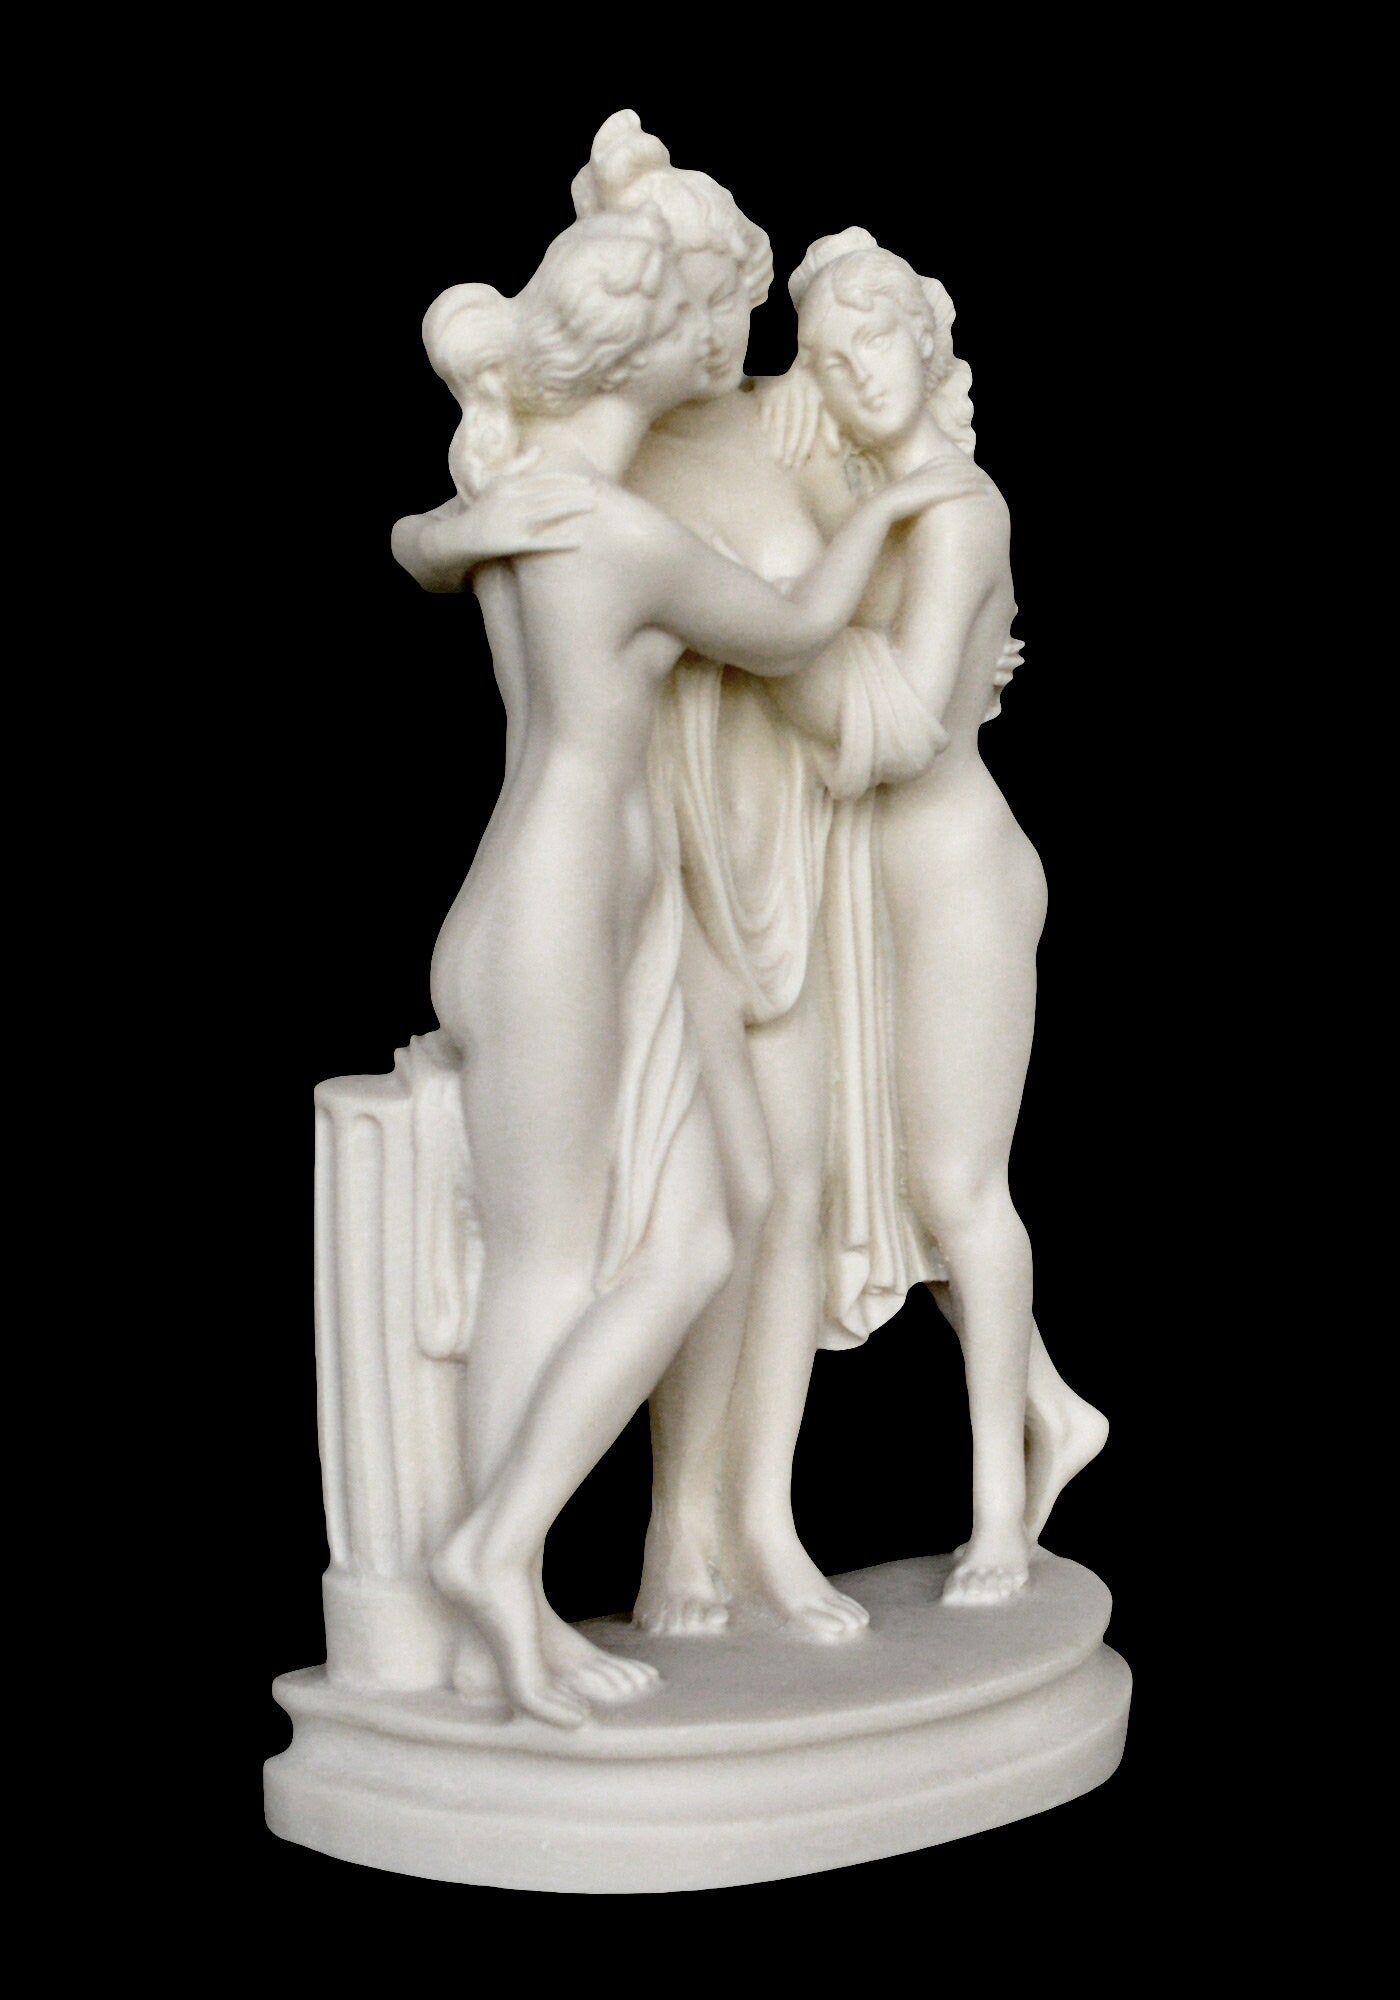 Three Graces Gratiae  - Euphrosyne, Aglaia, and Thalia - Greek Roman Goddesses of Pleasure, Creativity  - Alabaster  Sculpture